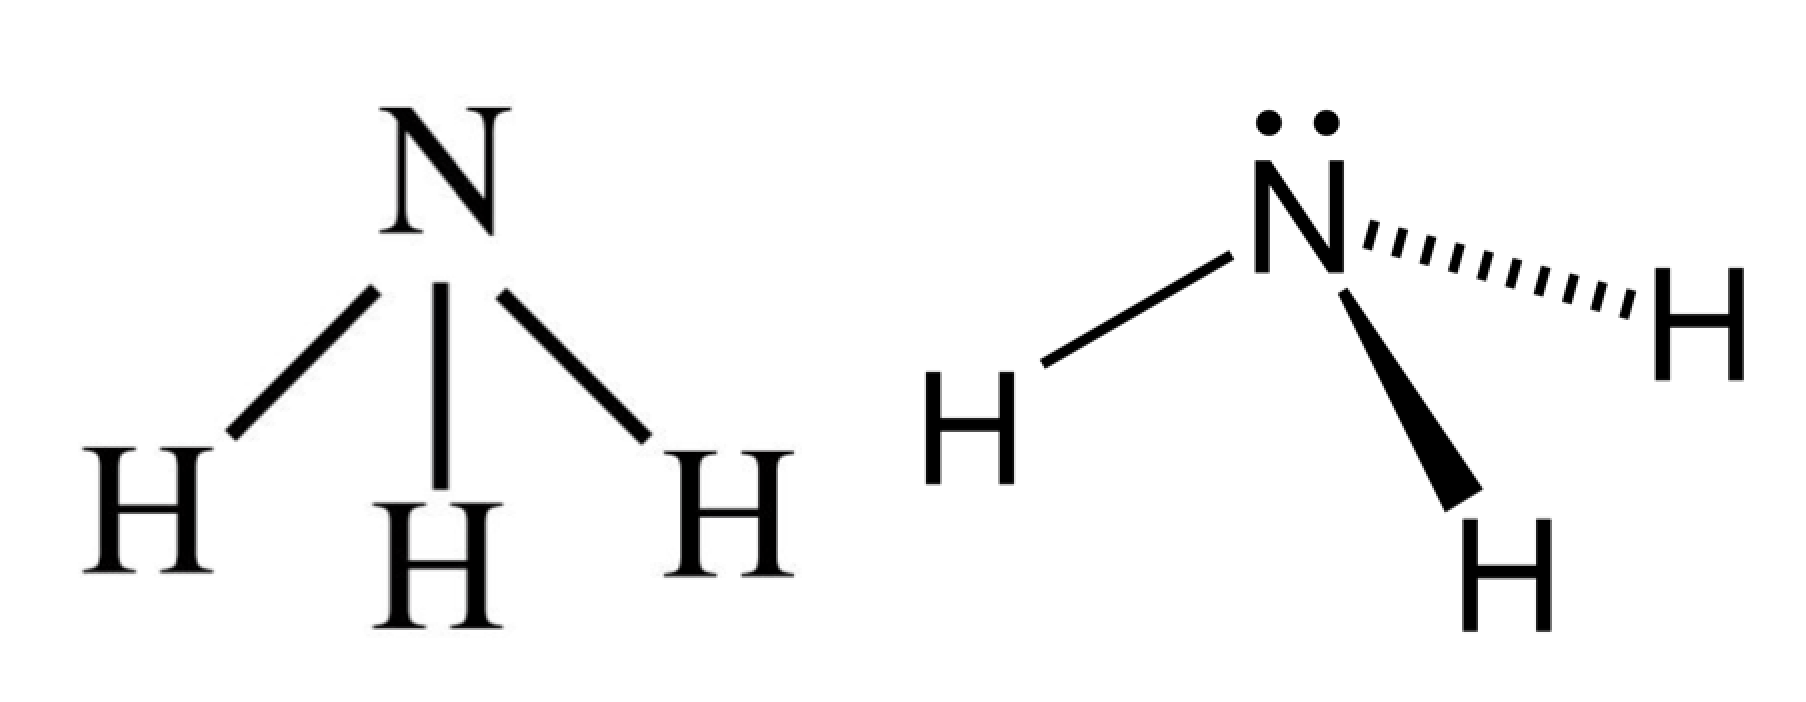 Газ nh3 название. Структурная формула аммиака. Формула молекулы аммиака. Структурная формула аммиака nh3. Структурная формула аммиака в химии.